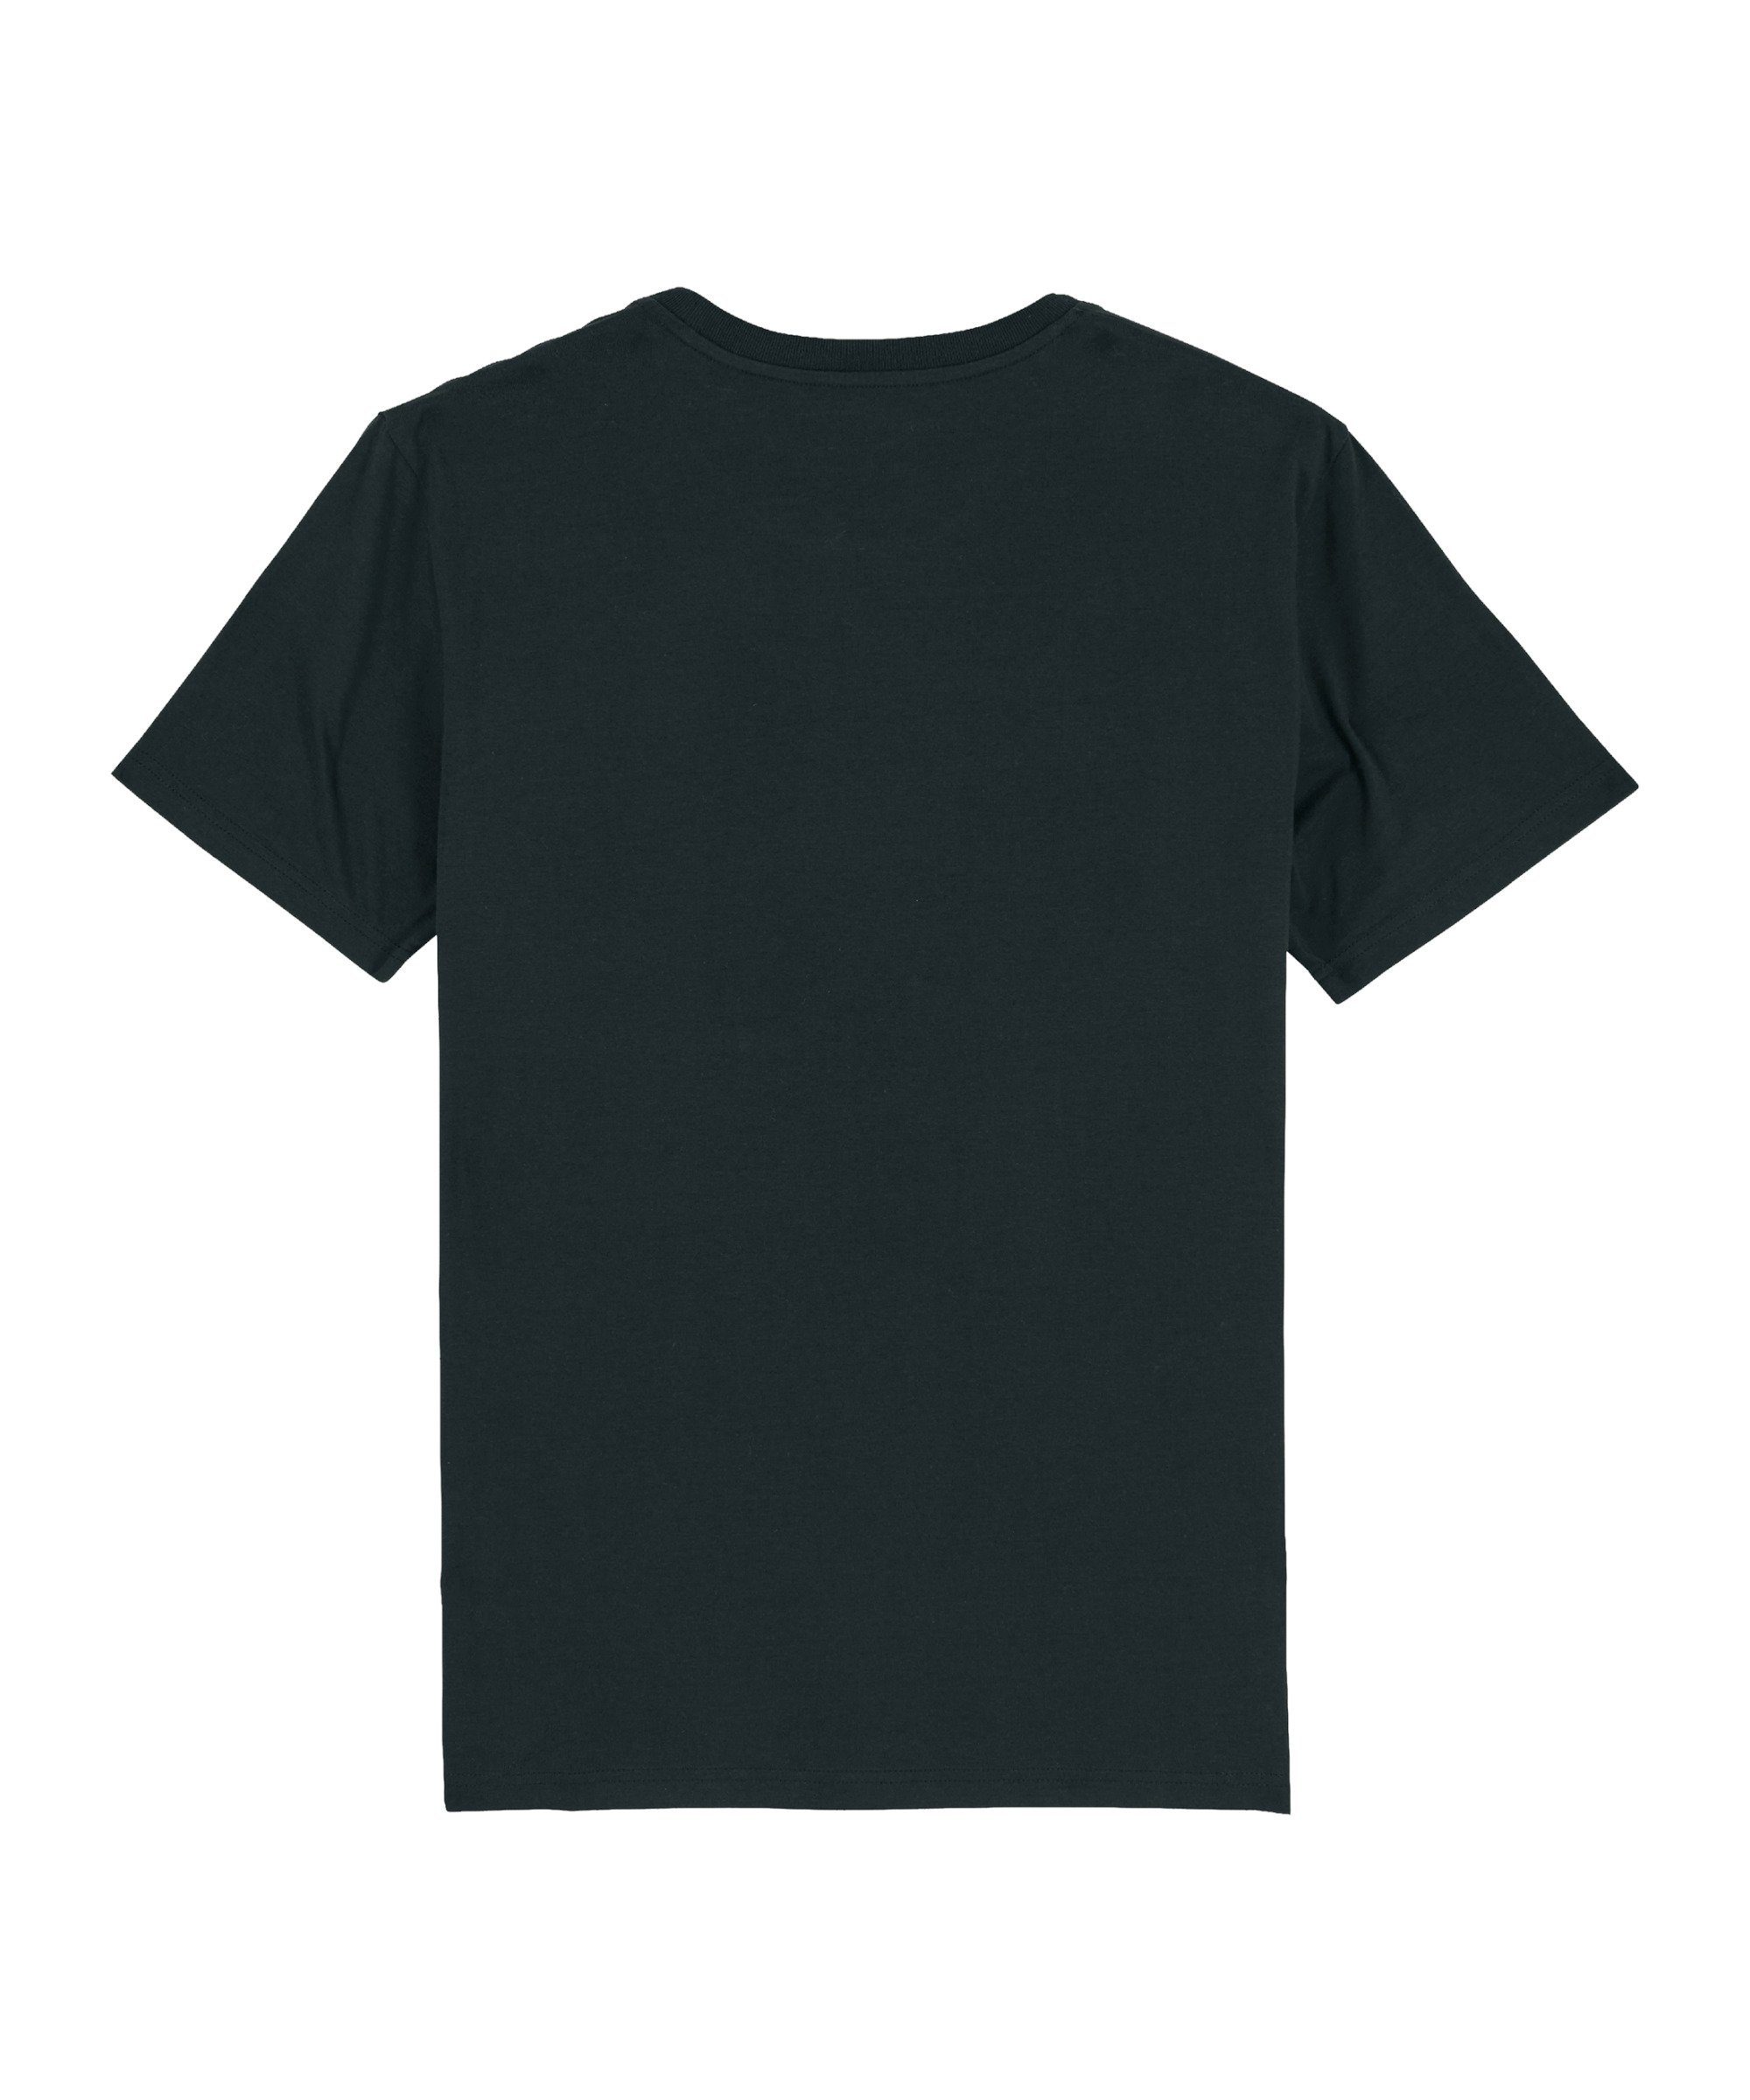 T-Shirt schwarz T-Shirt "Classic" Nachhaltiges Produkt Bolzplatzkind